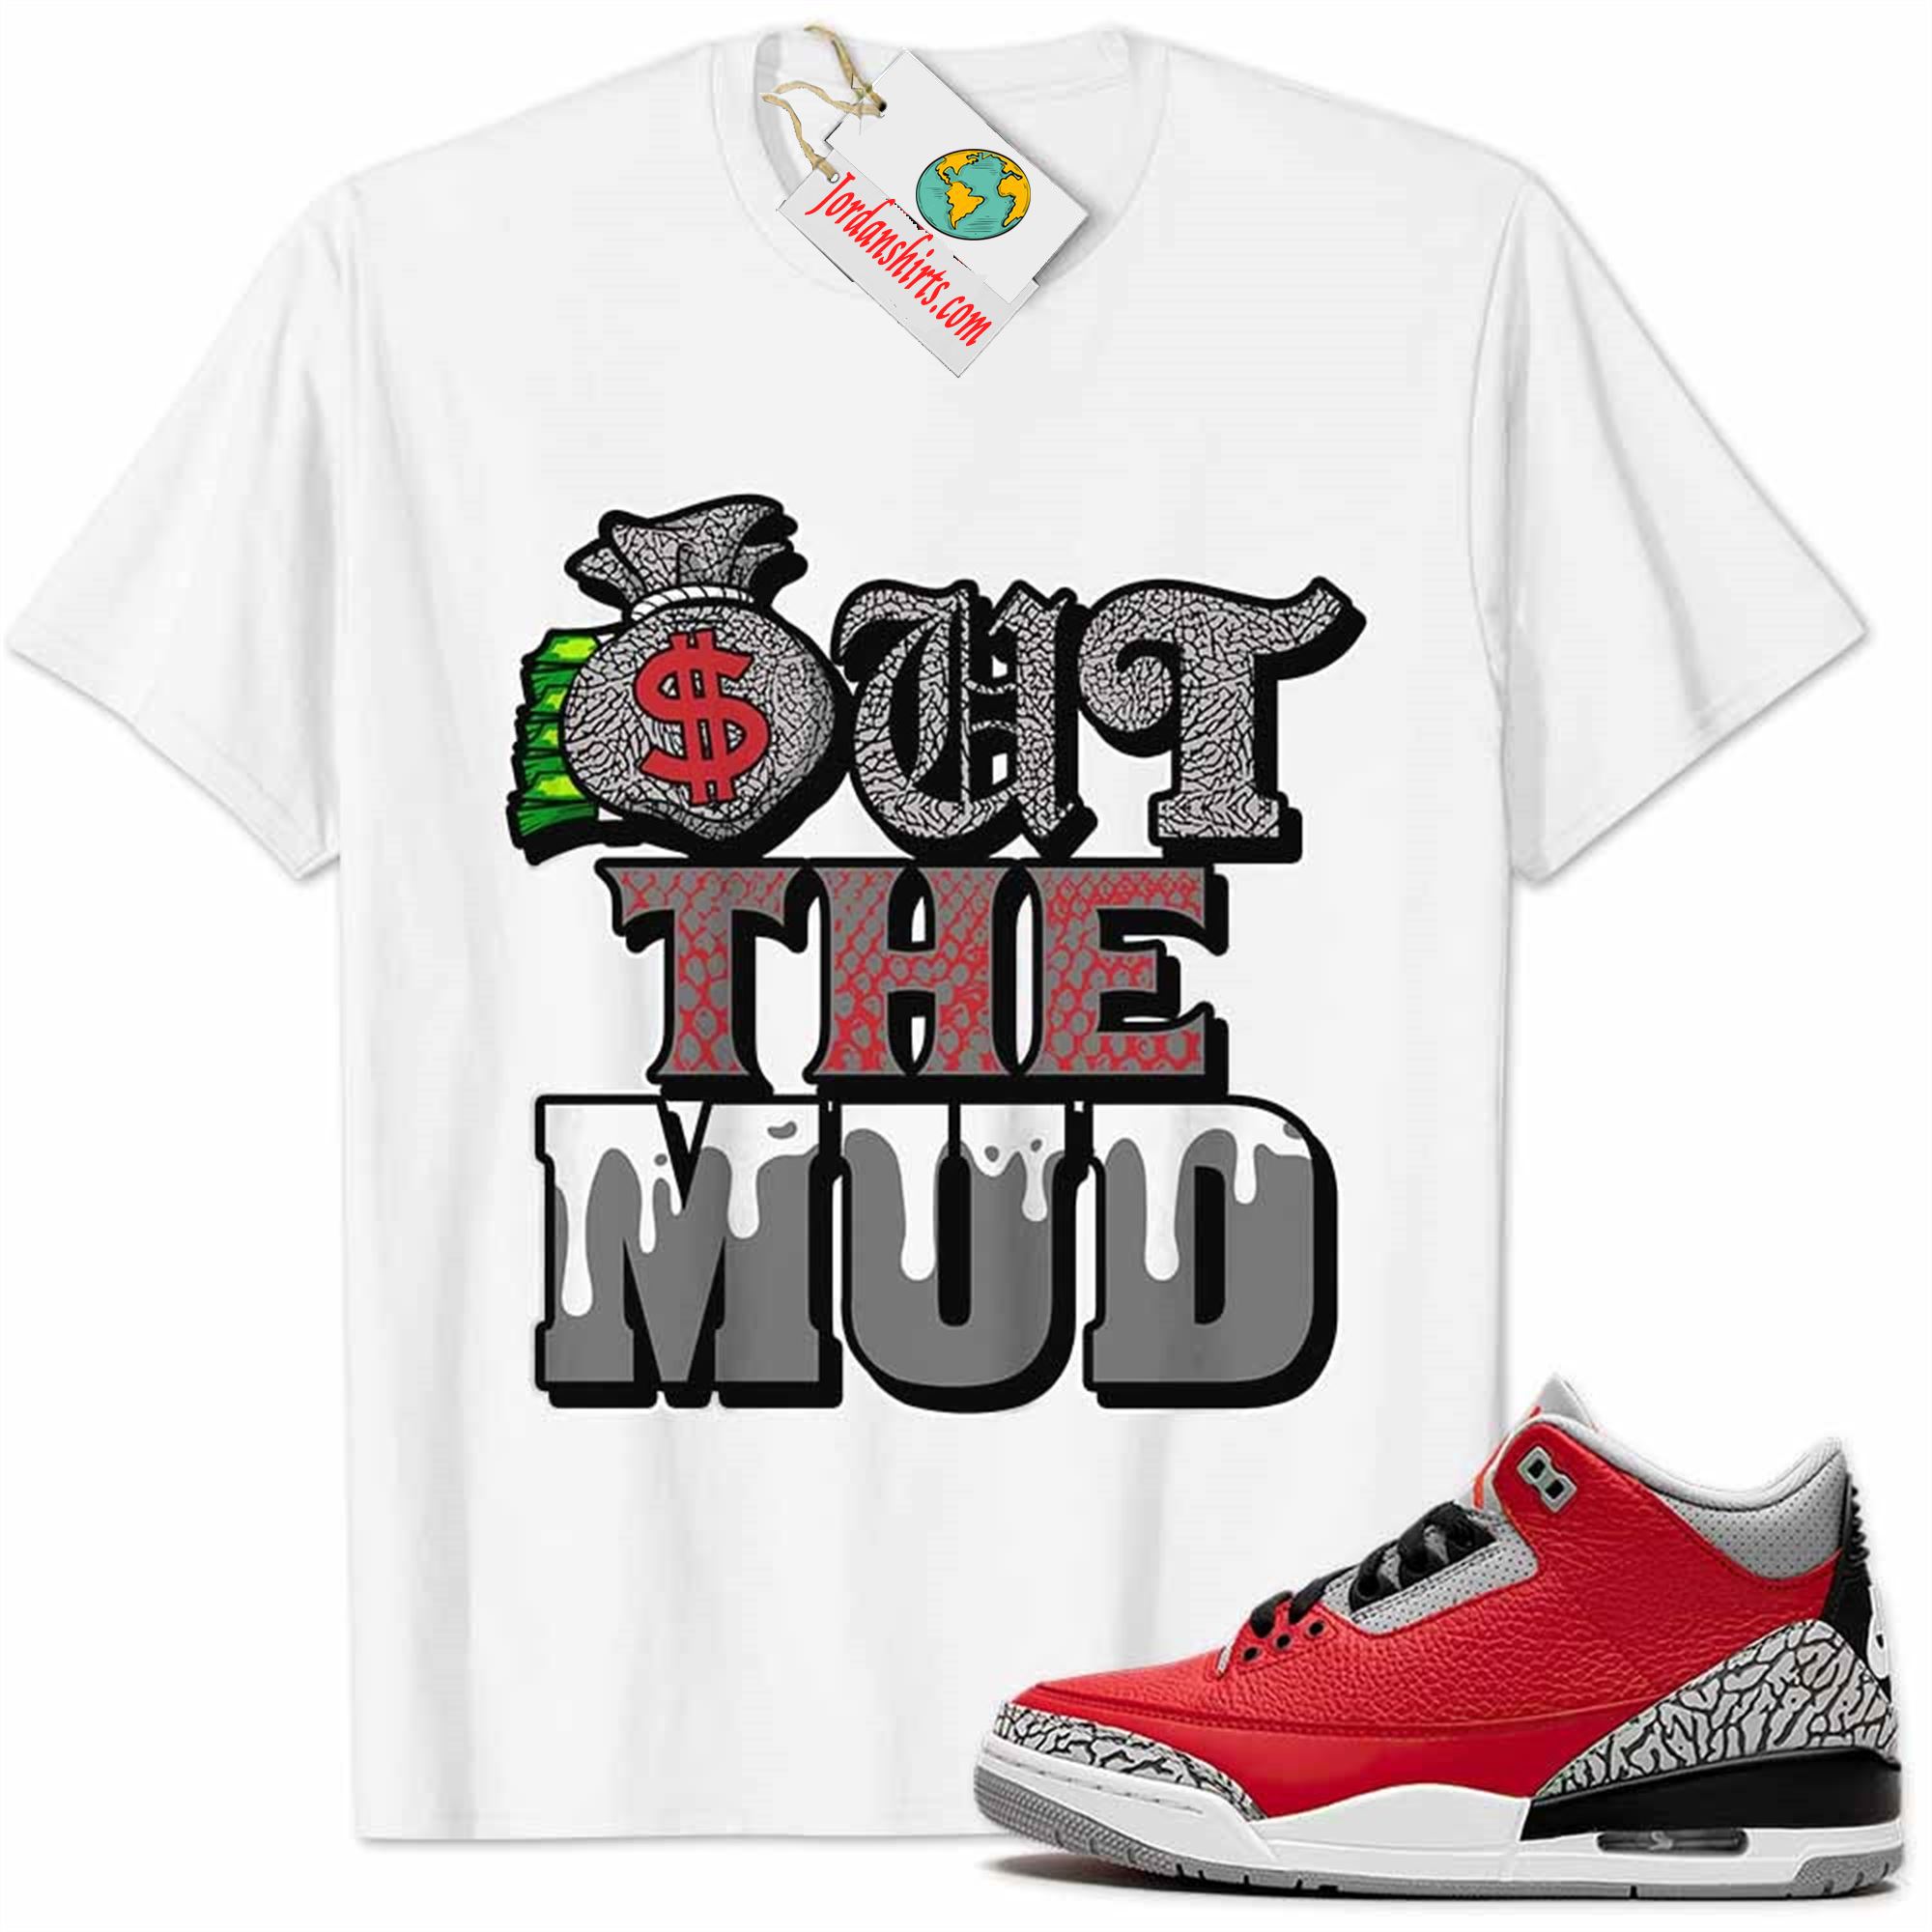 Jordan 3 Shirt, Jordan 3 Cement Shirt Out The Mud Money Bag White Full Size Up To 5xl